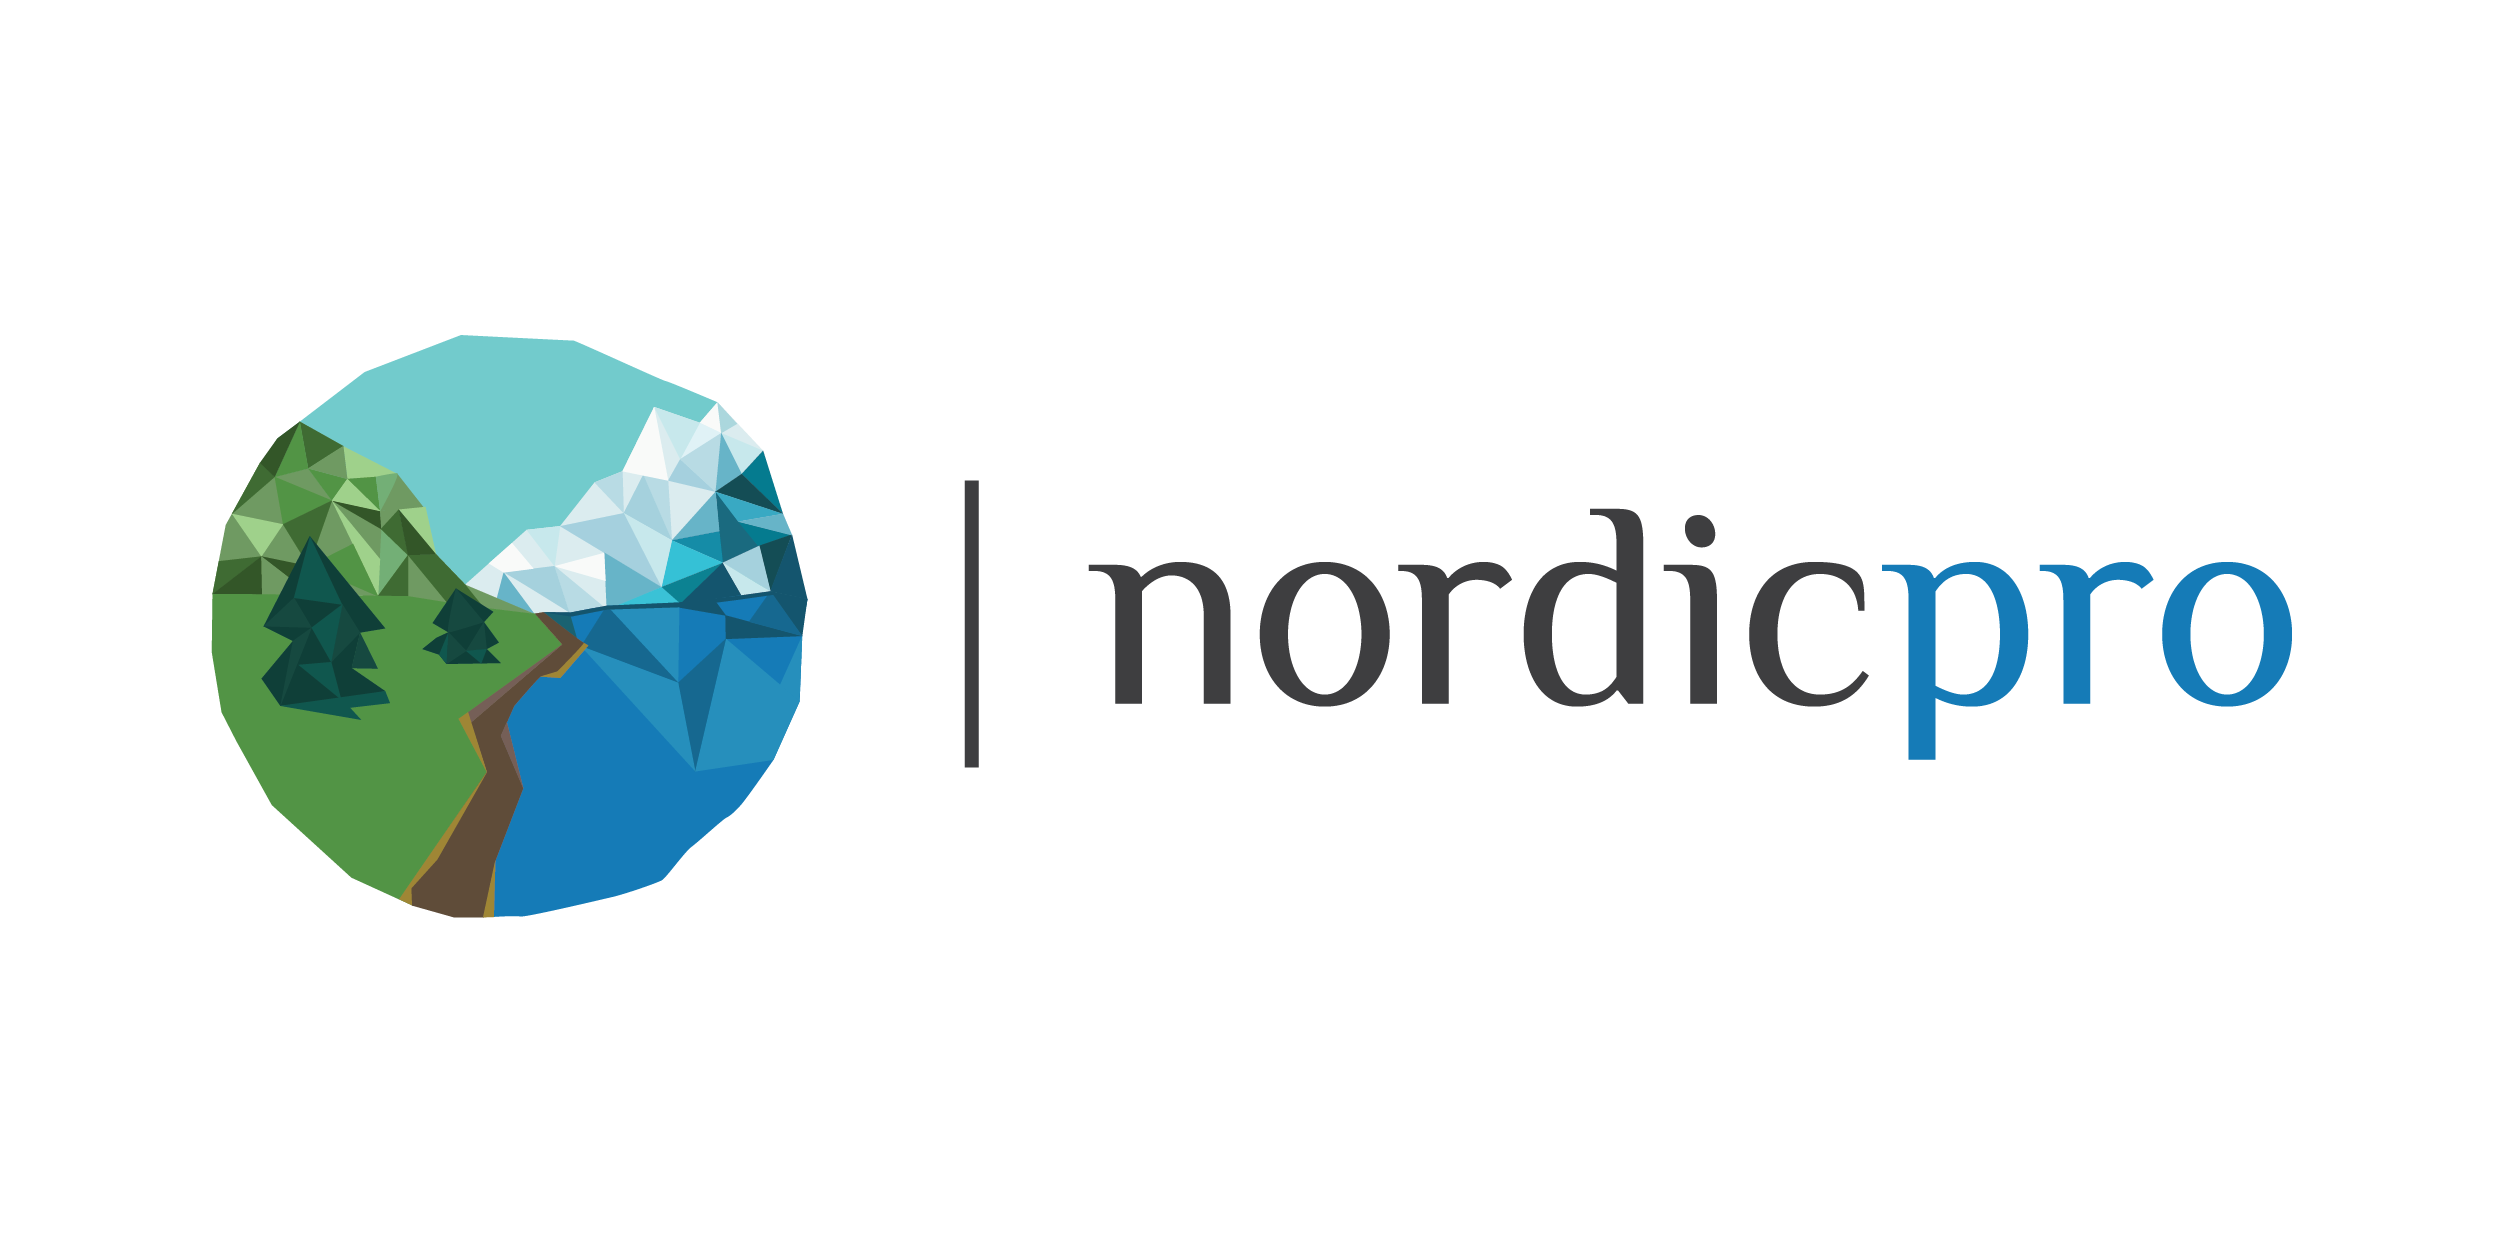 NORDICPRO logo